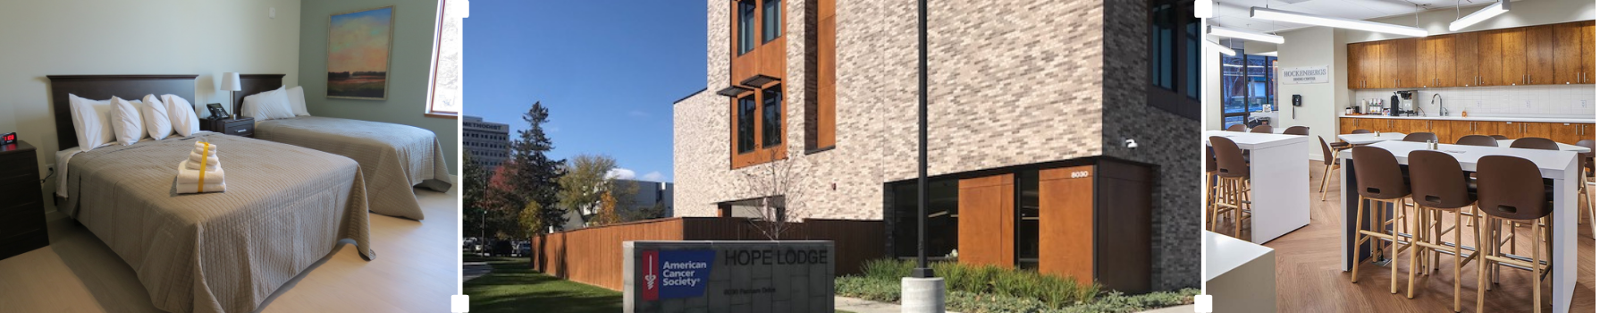 American Cancer Society Hope Lodge Omaha